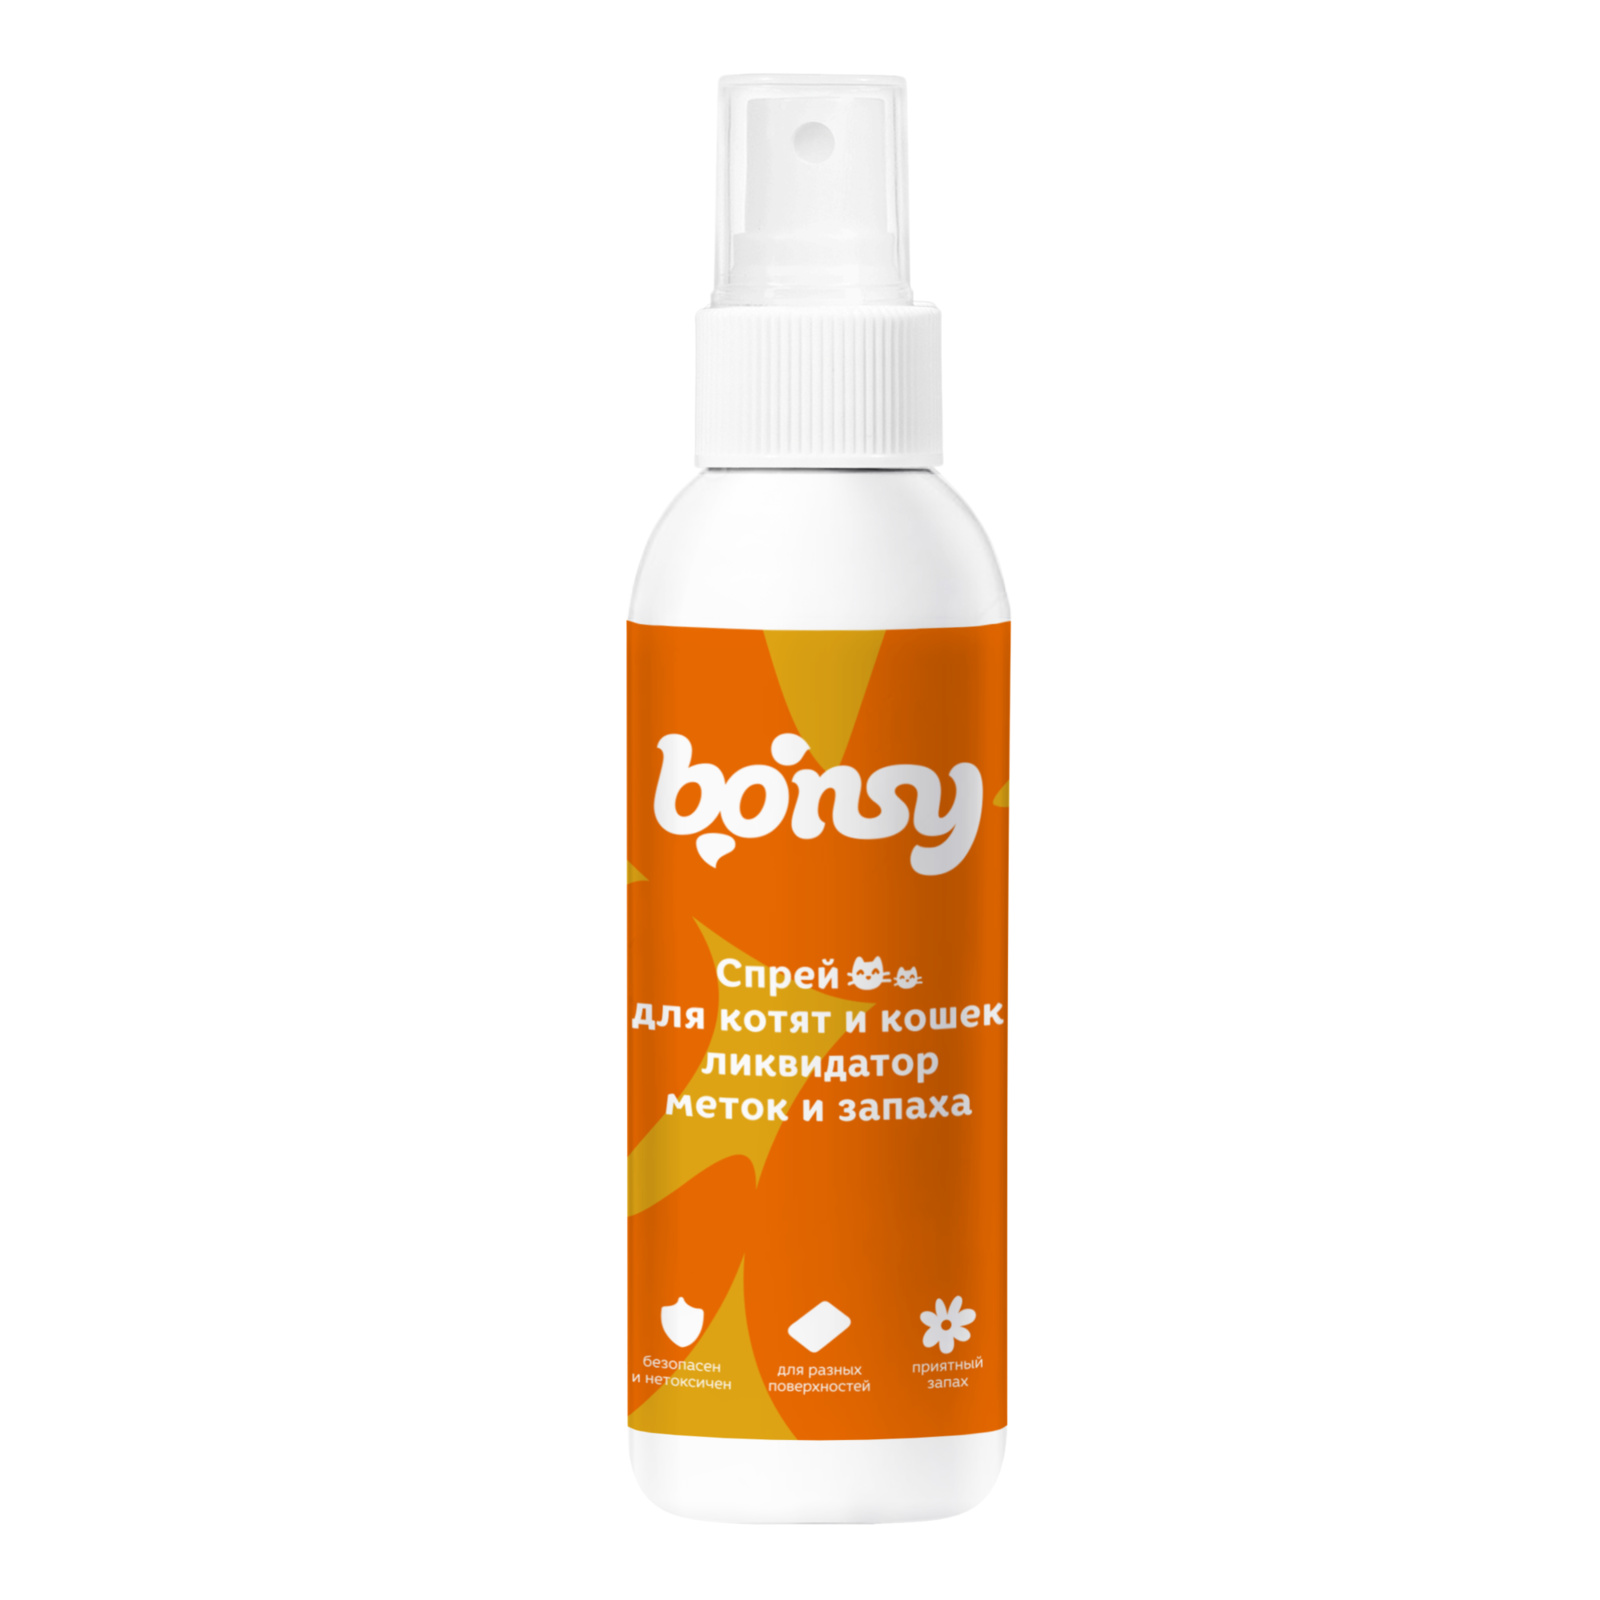 Bonsy Bonsy спрей «Ликвидатор меток и запаха» для кошек и котят (150 г) bonsy bonsy антипаразитарные биокапли на холку для котят и кошек 30 г